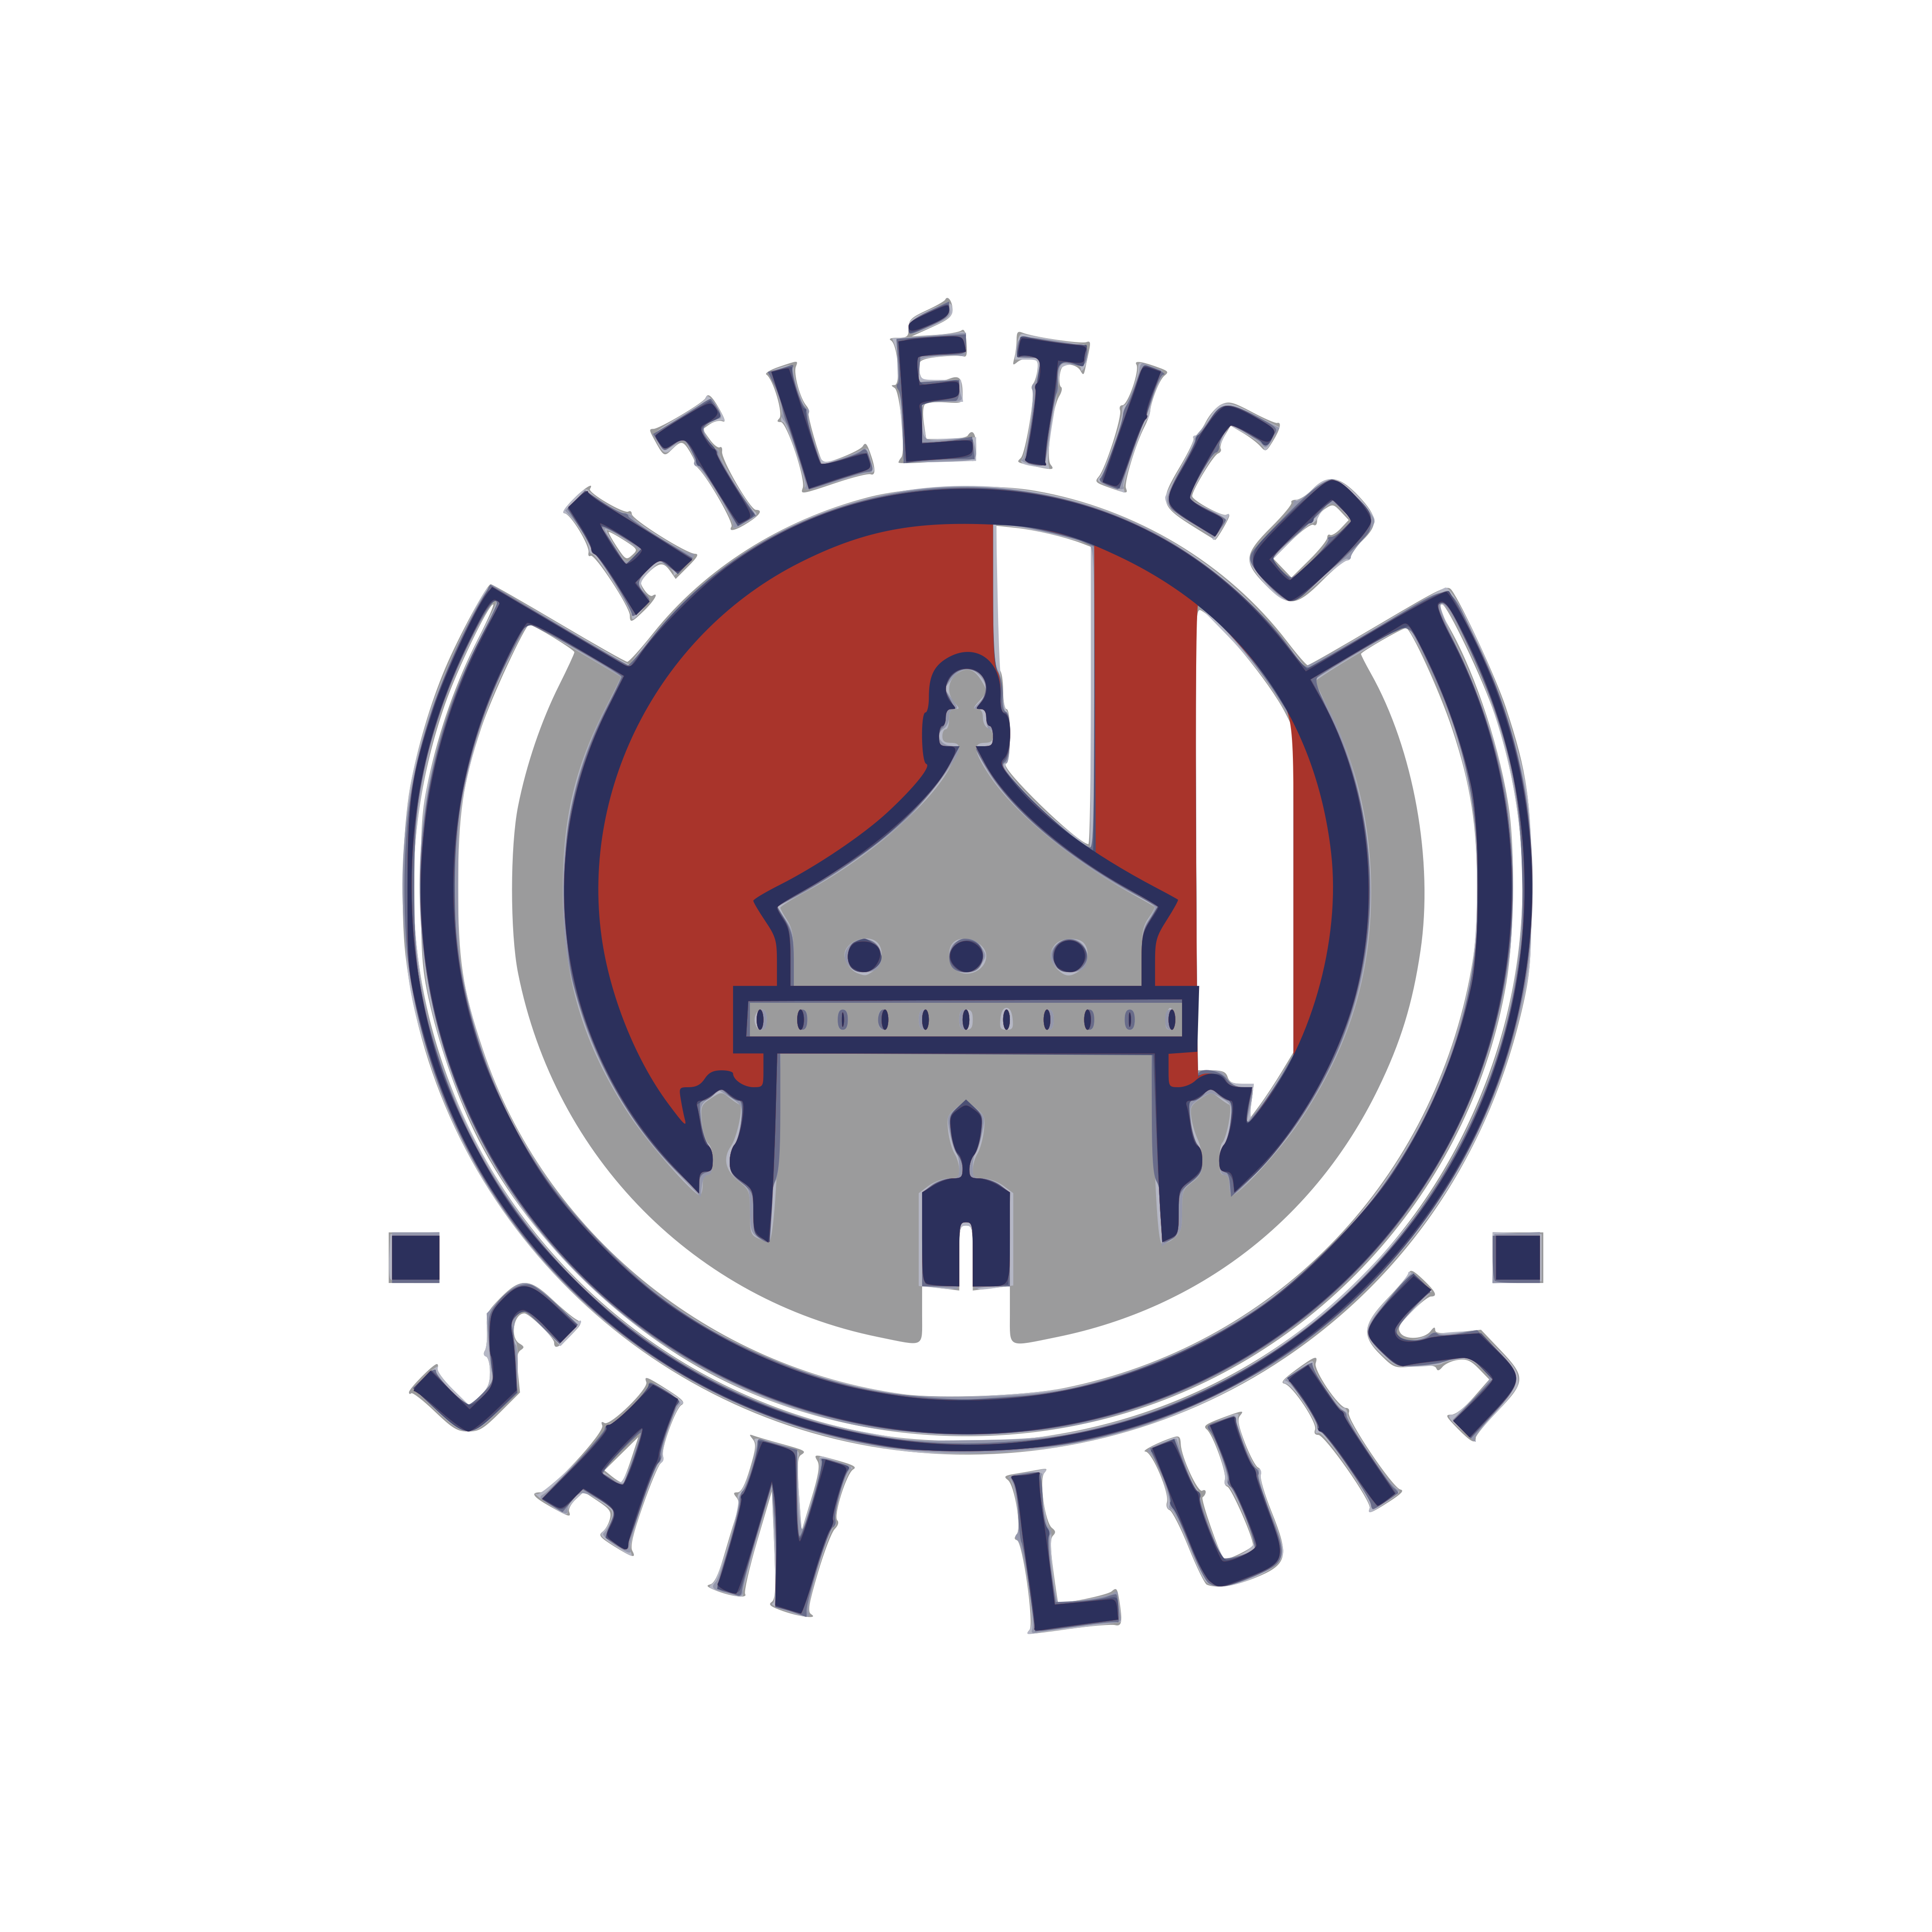 atlético san luis logo 0 1 - Atlético de San Luis Logo